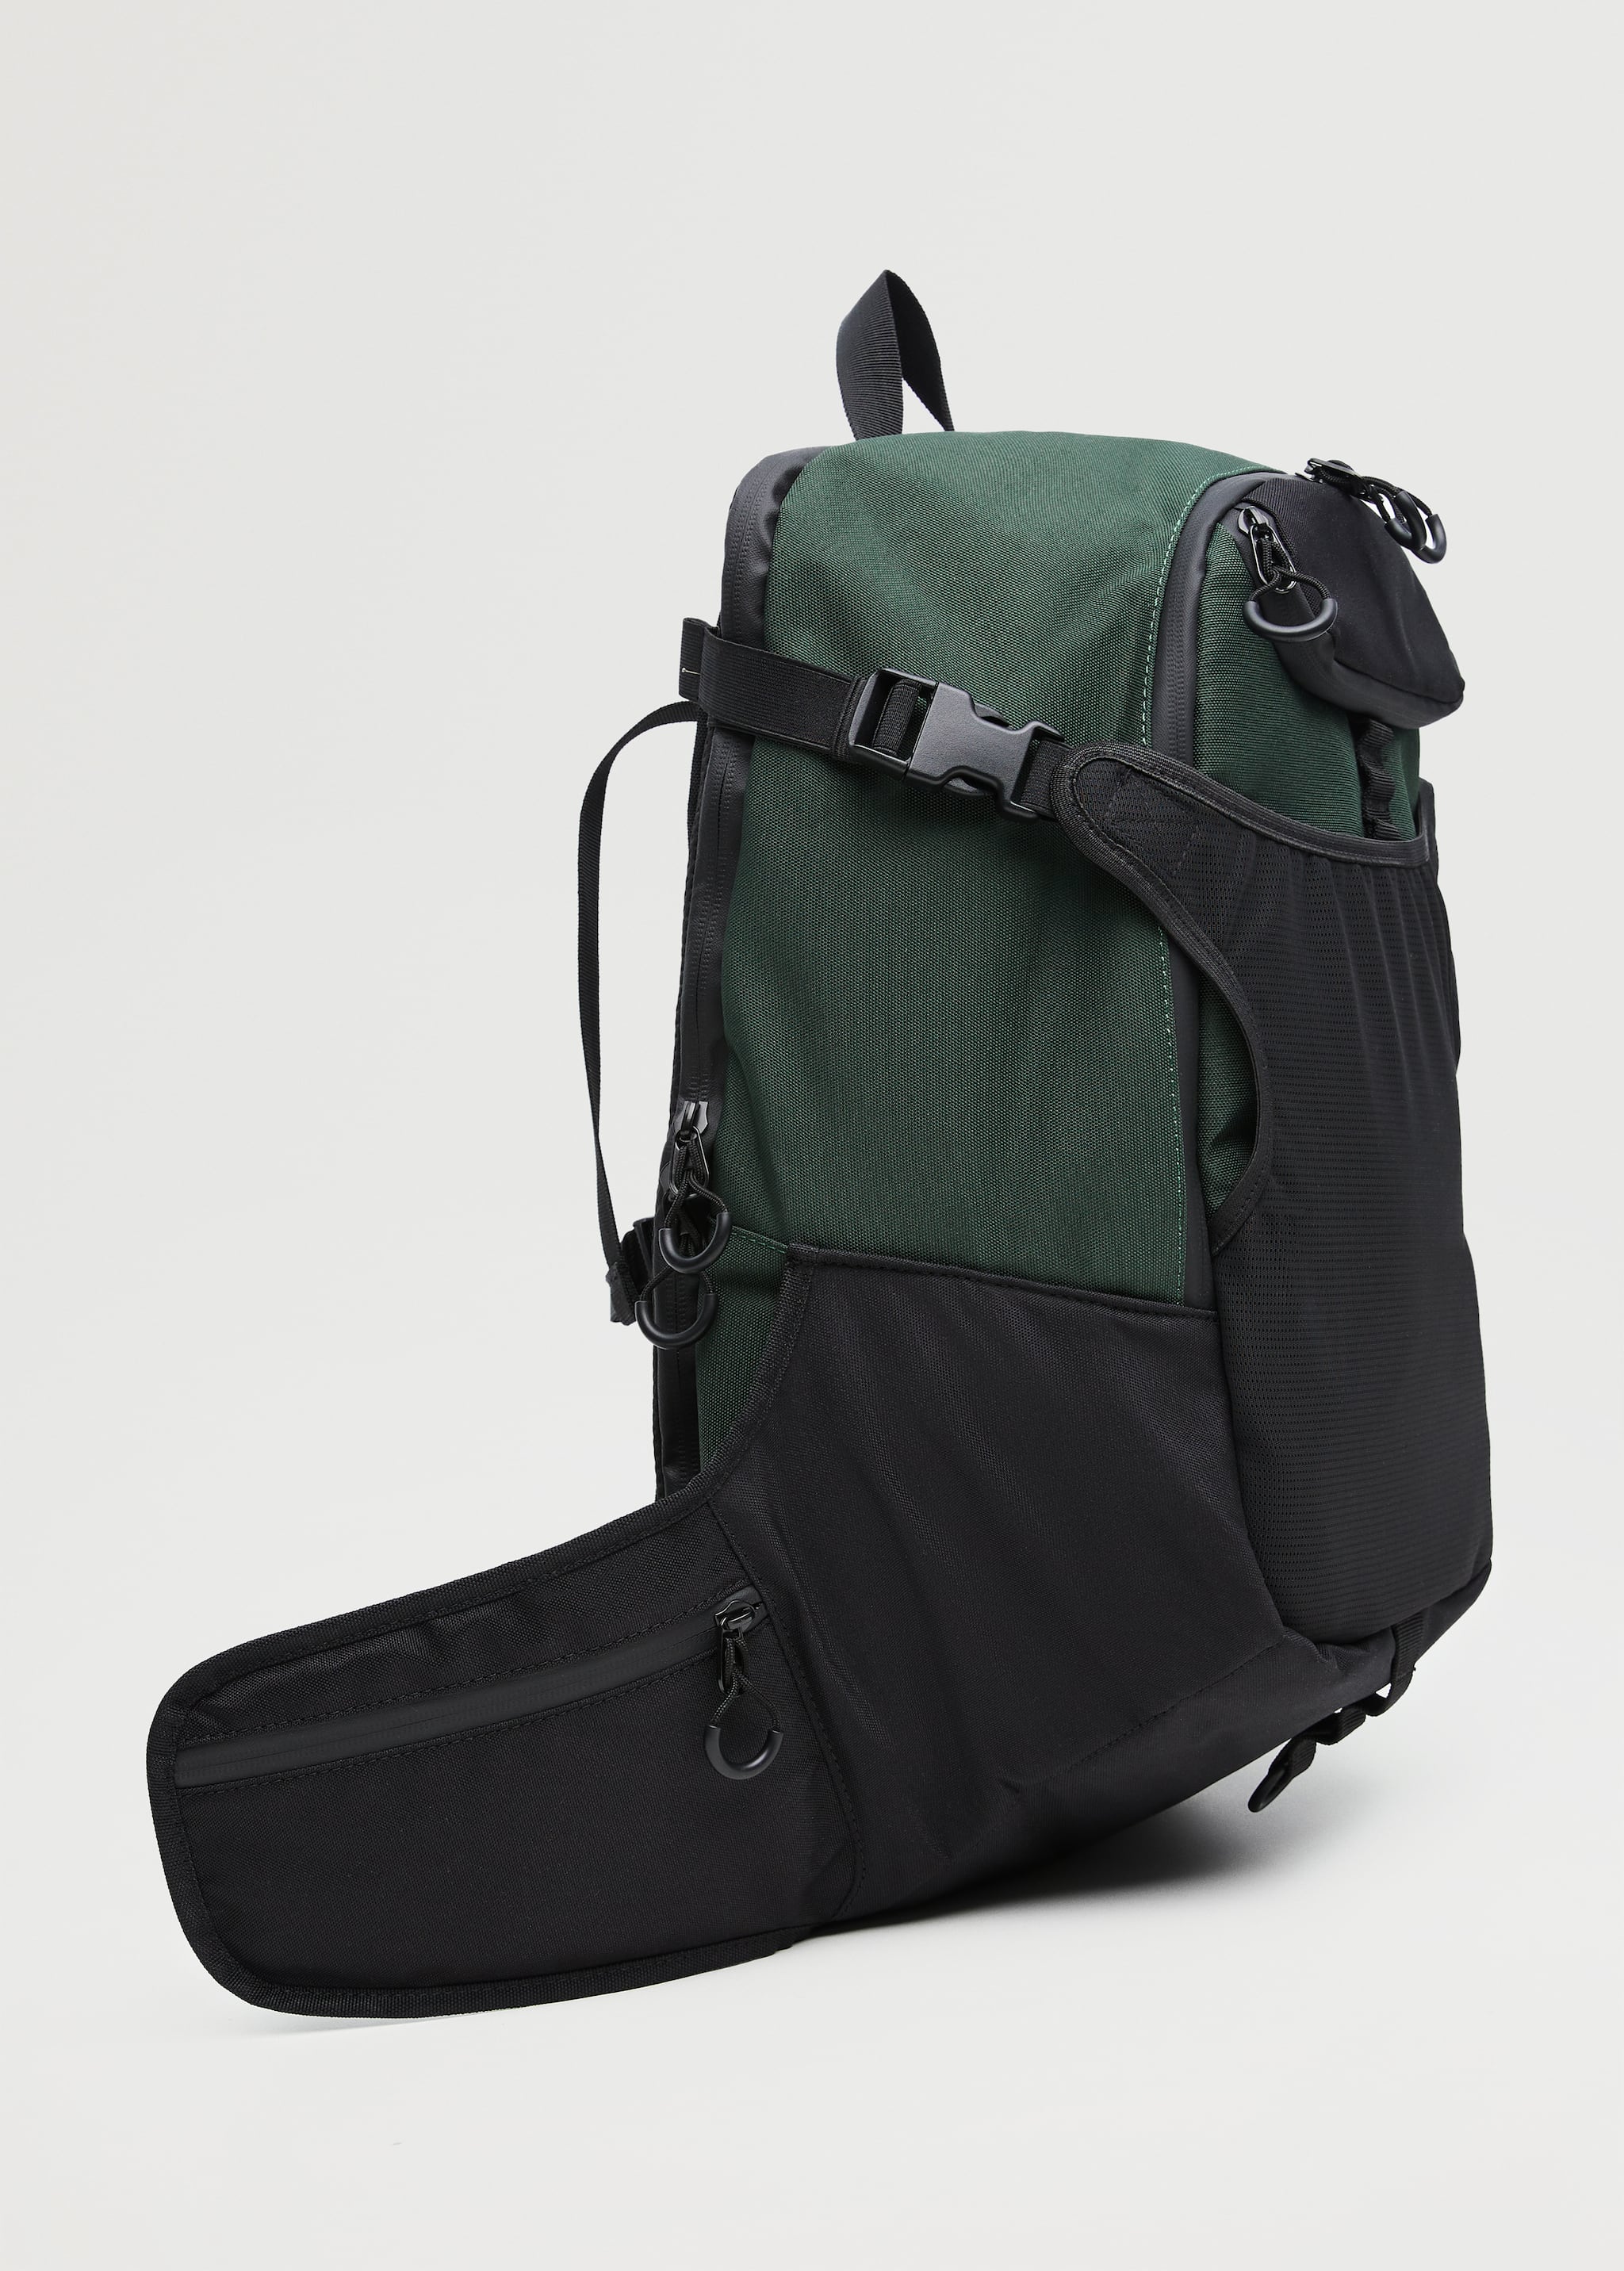 Multifunctional contrasting backpack - Medium plane